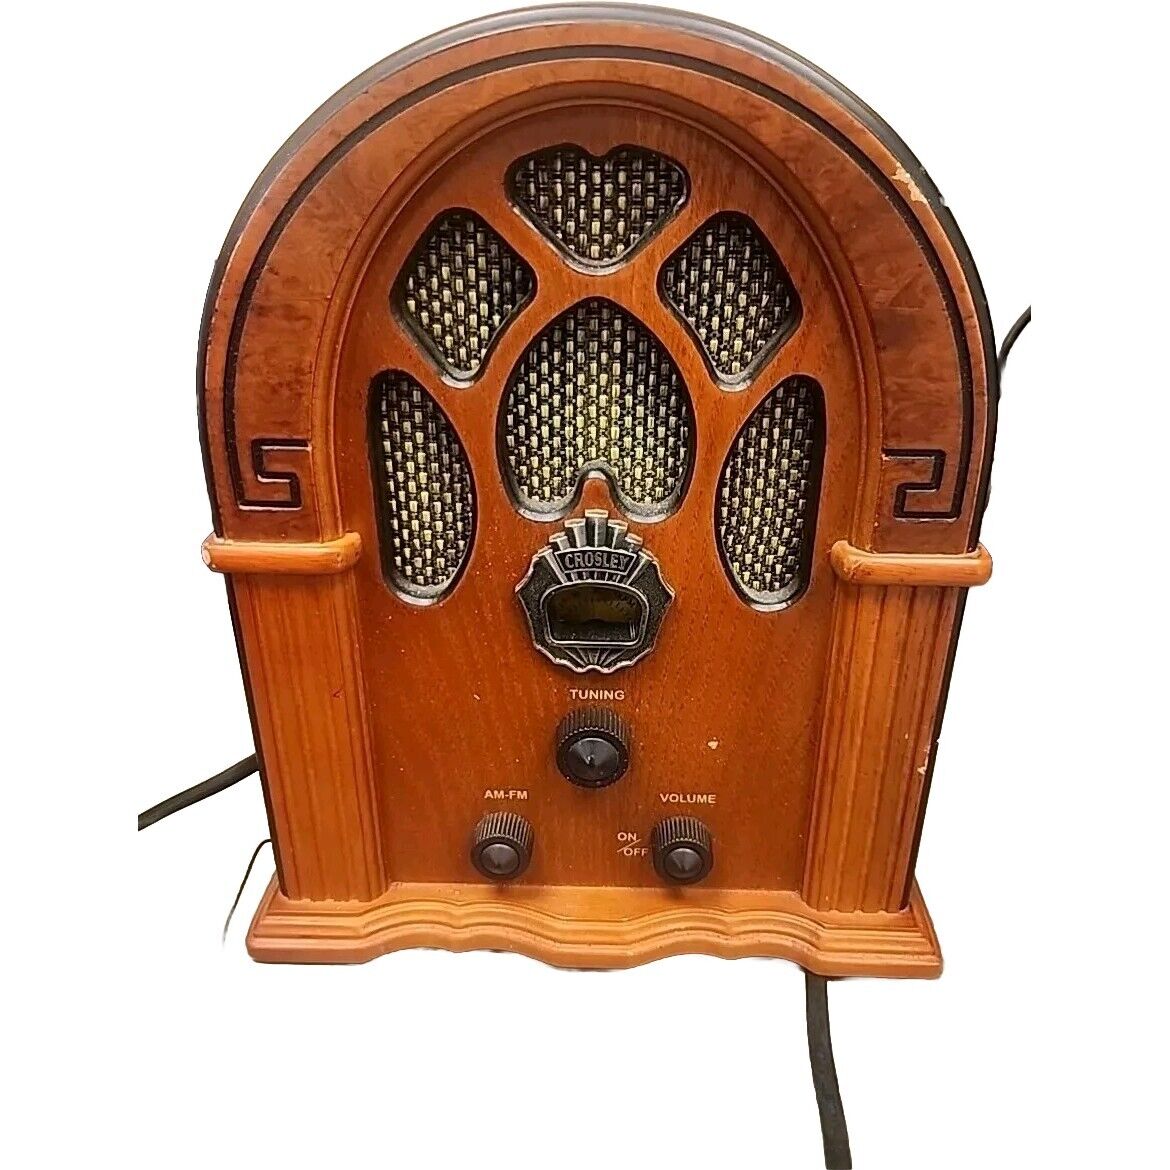 CROSLEY RADIO PORTABLE AM FM Model CR31 VINTAGE STYLE LOOKING RADIO WORKS GREAT 